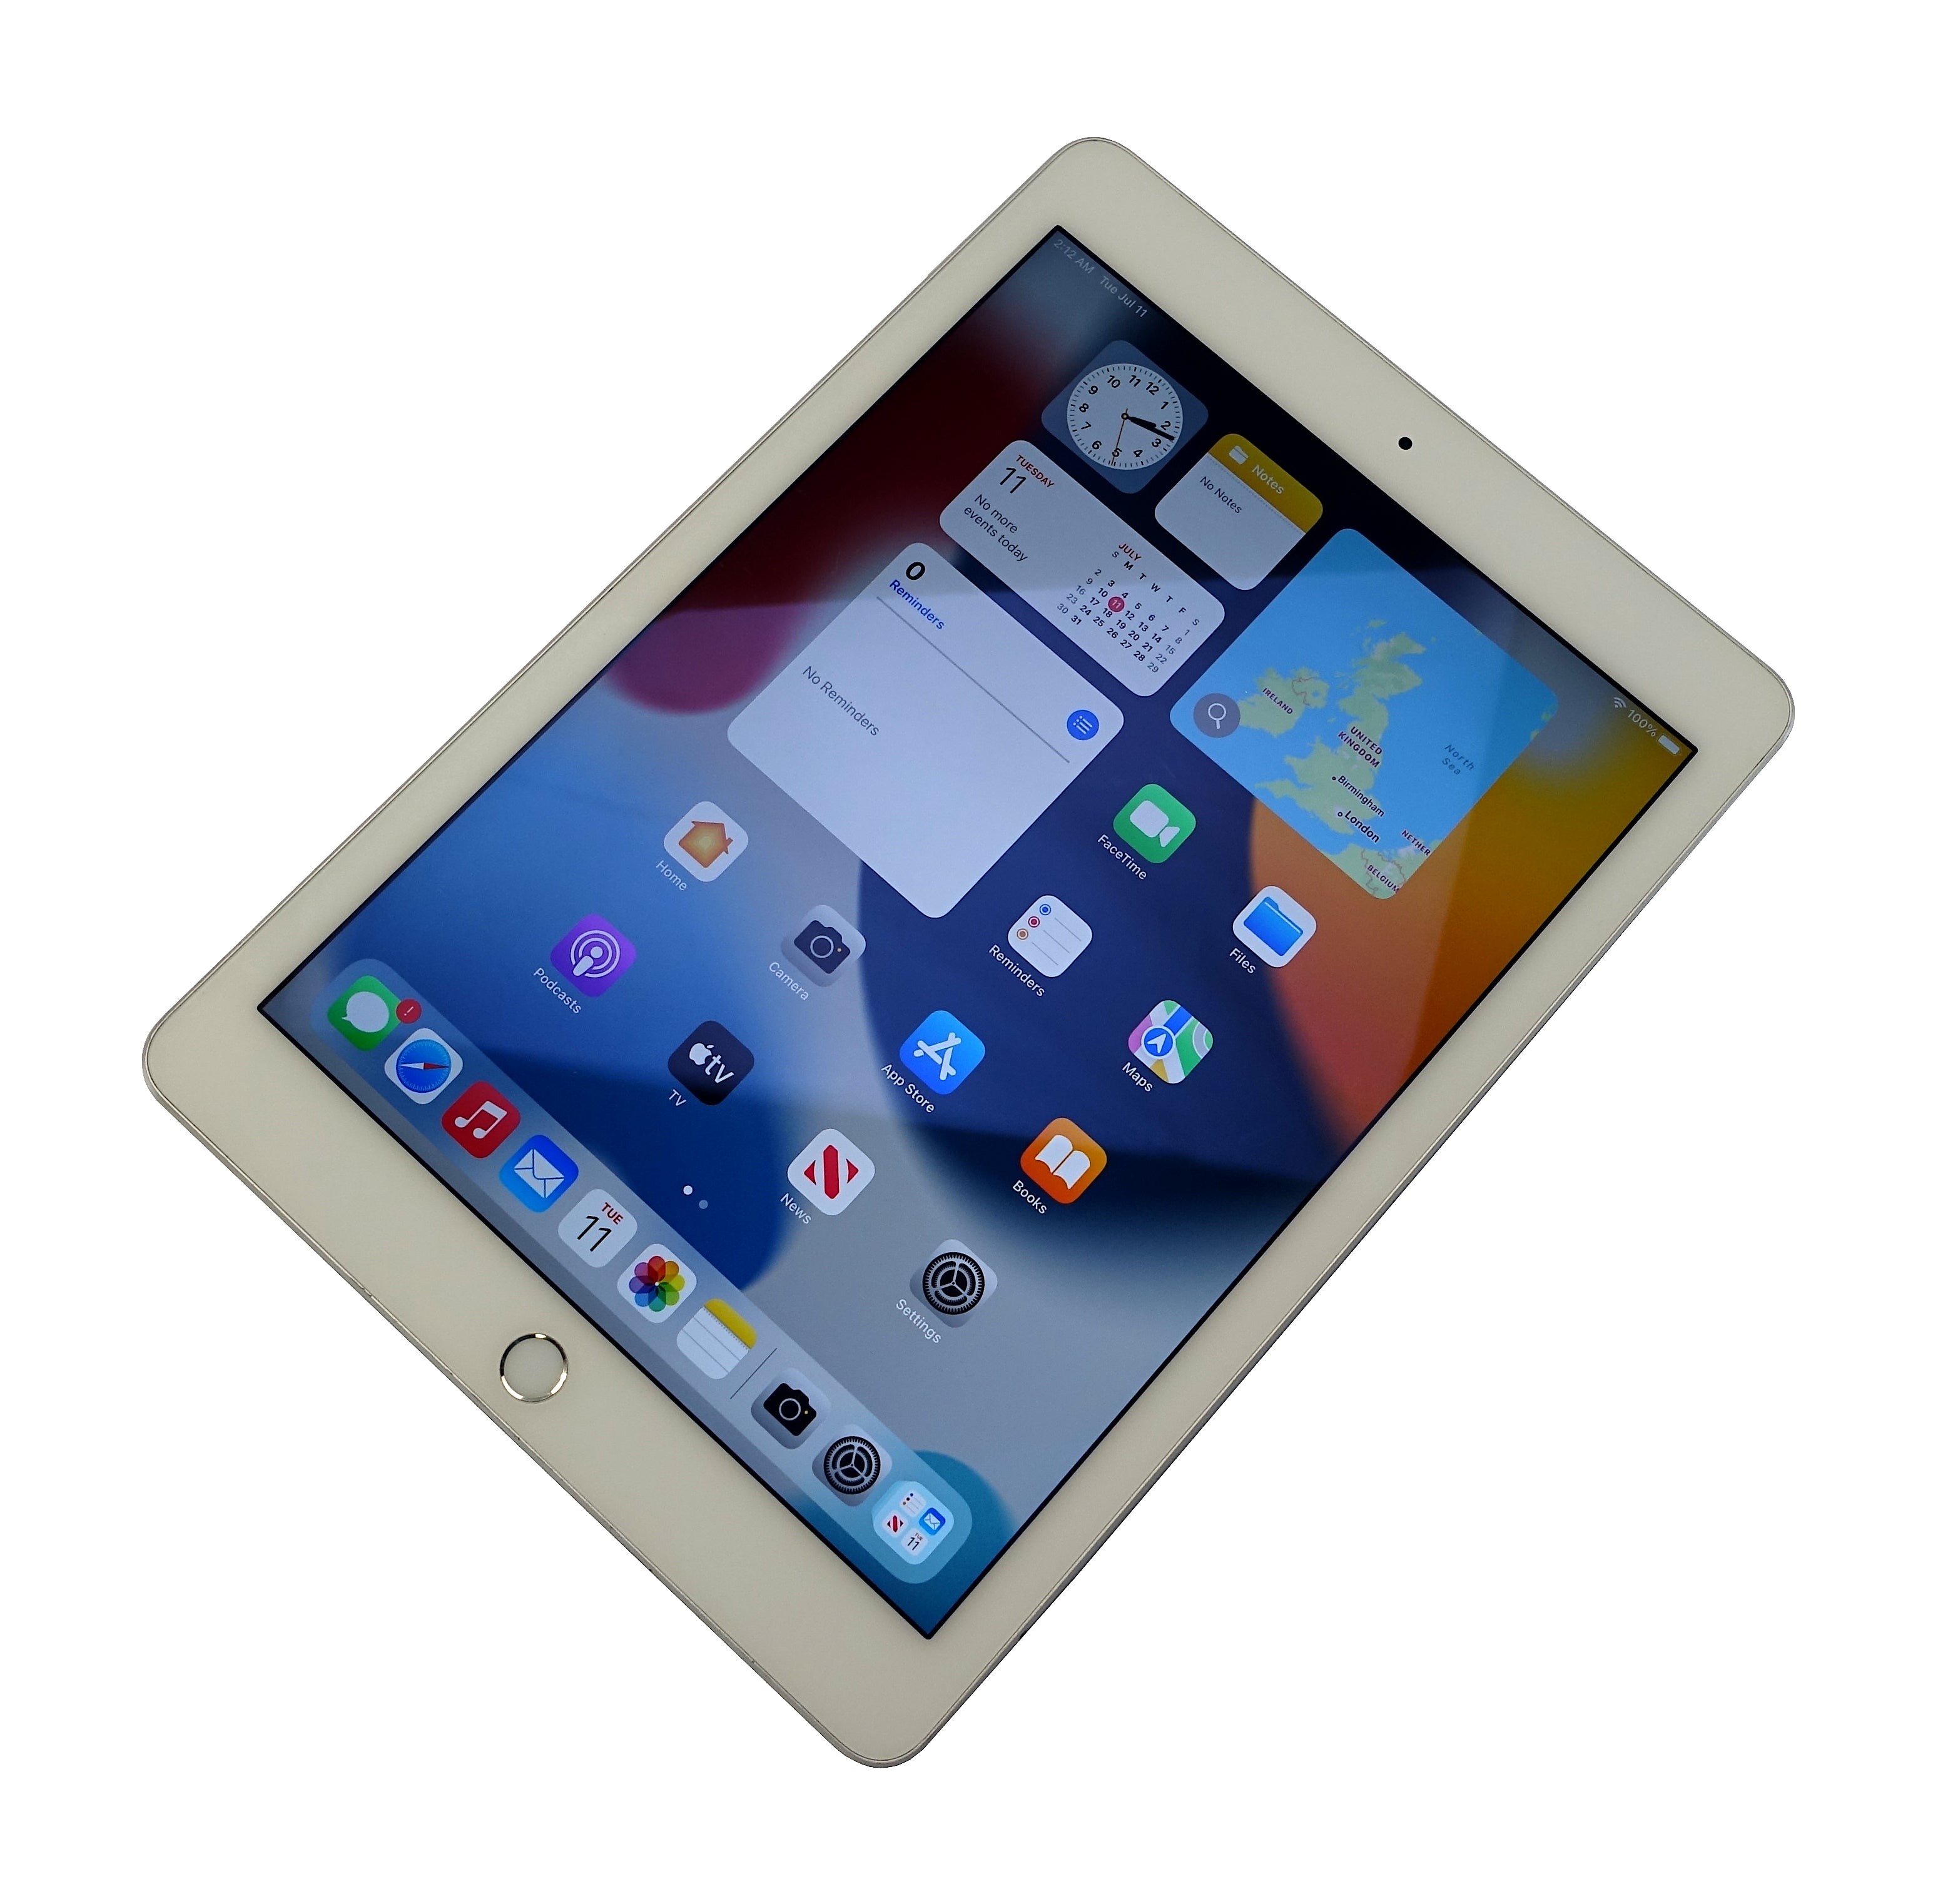 Apple iPad Air 2 Tablet, 16GB, WiFi, Silver, A1566